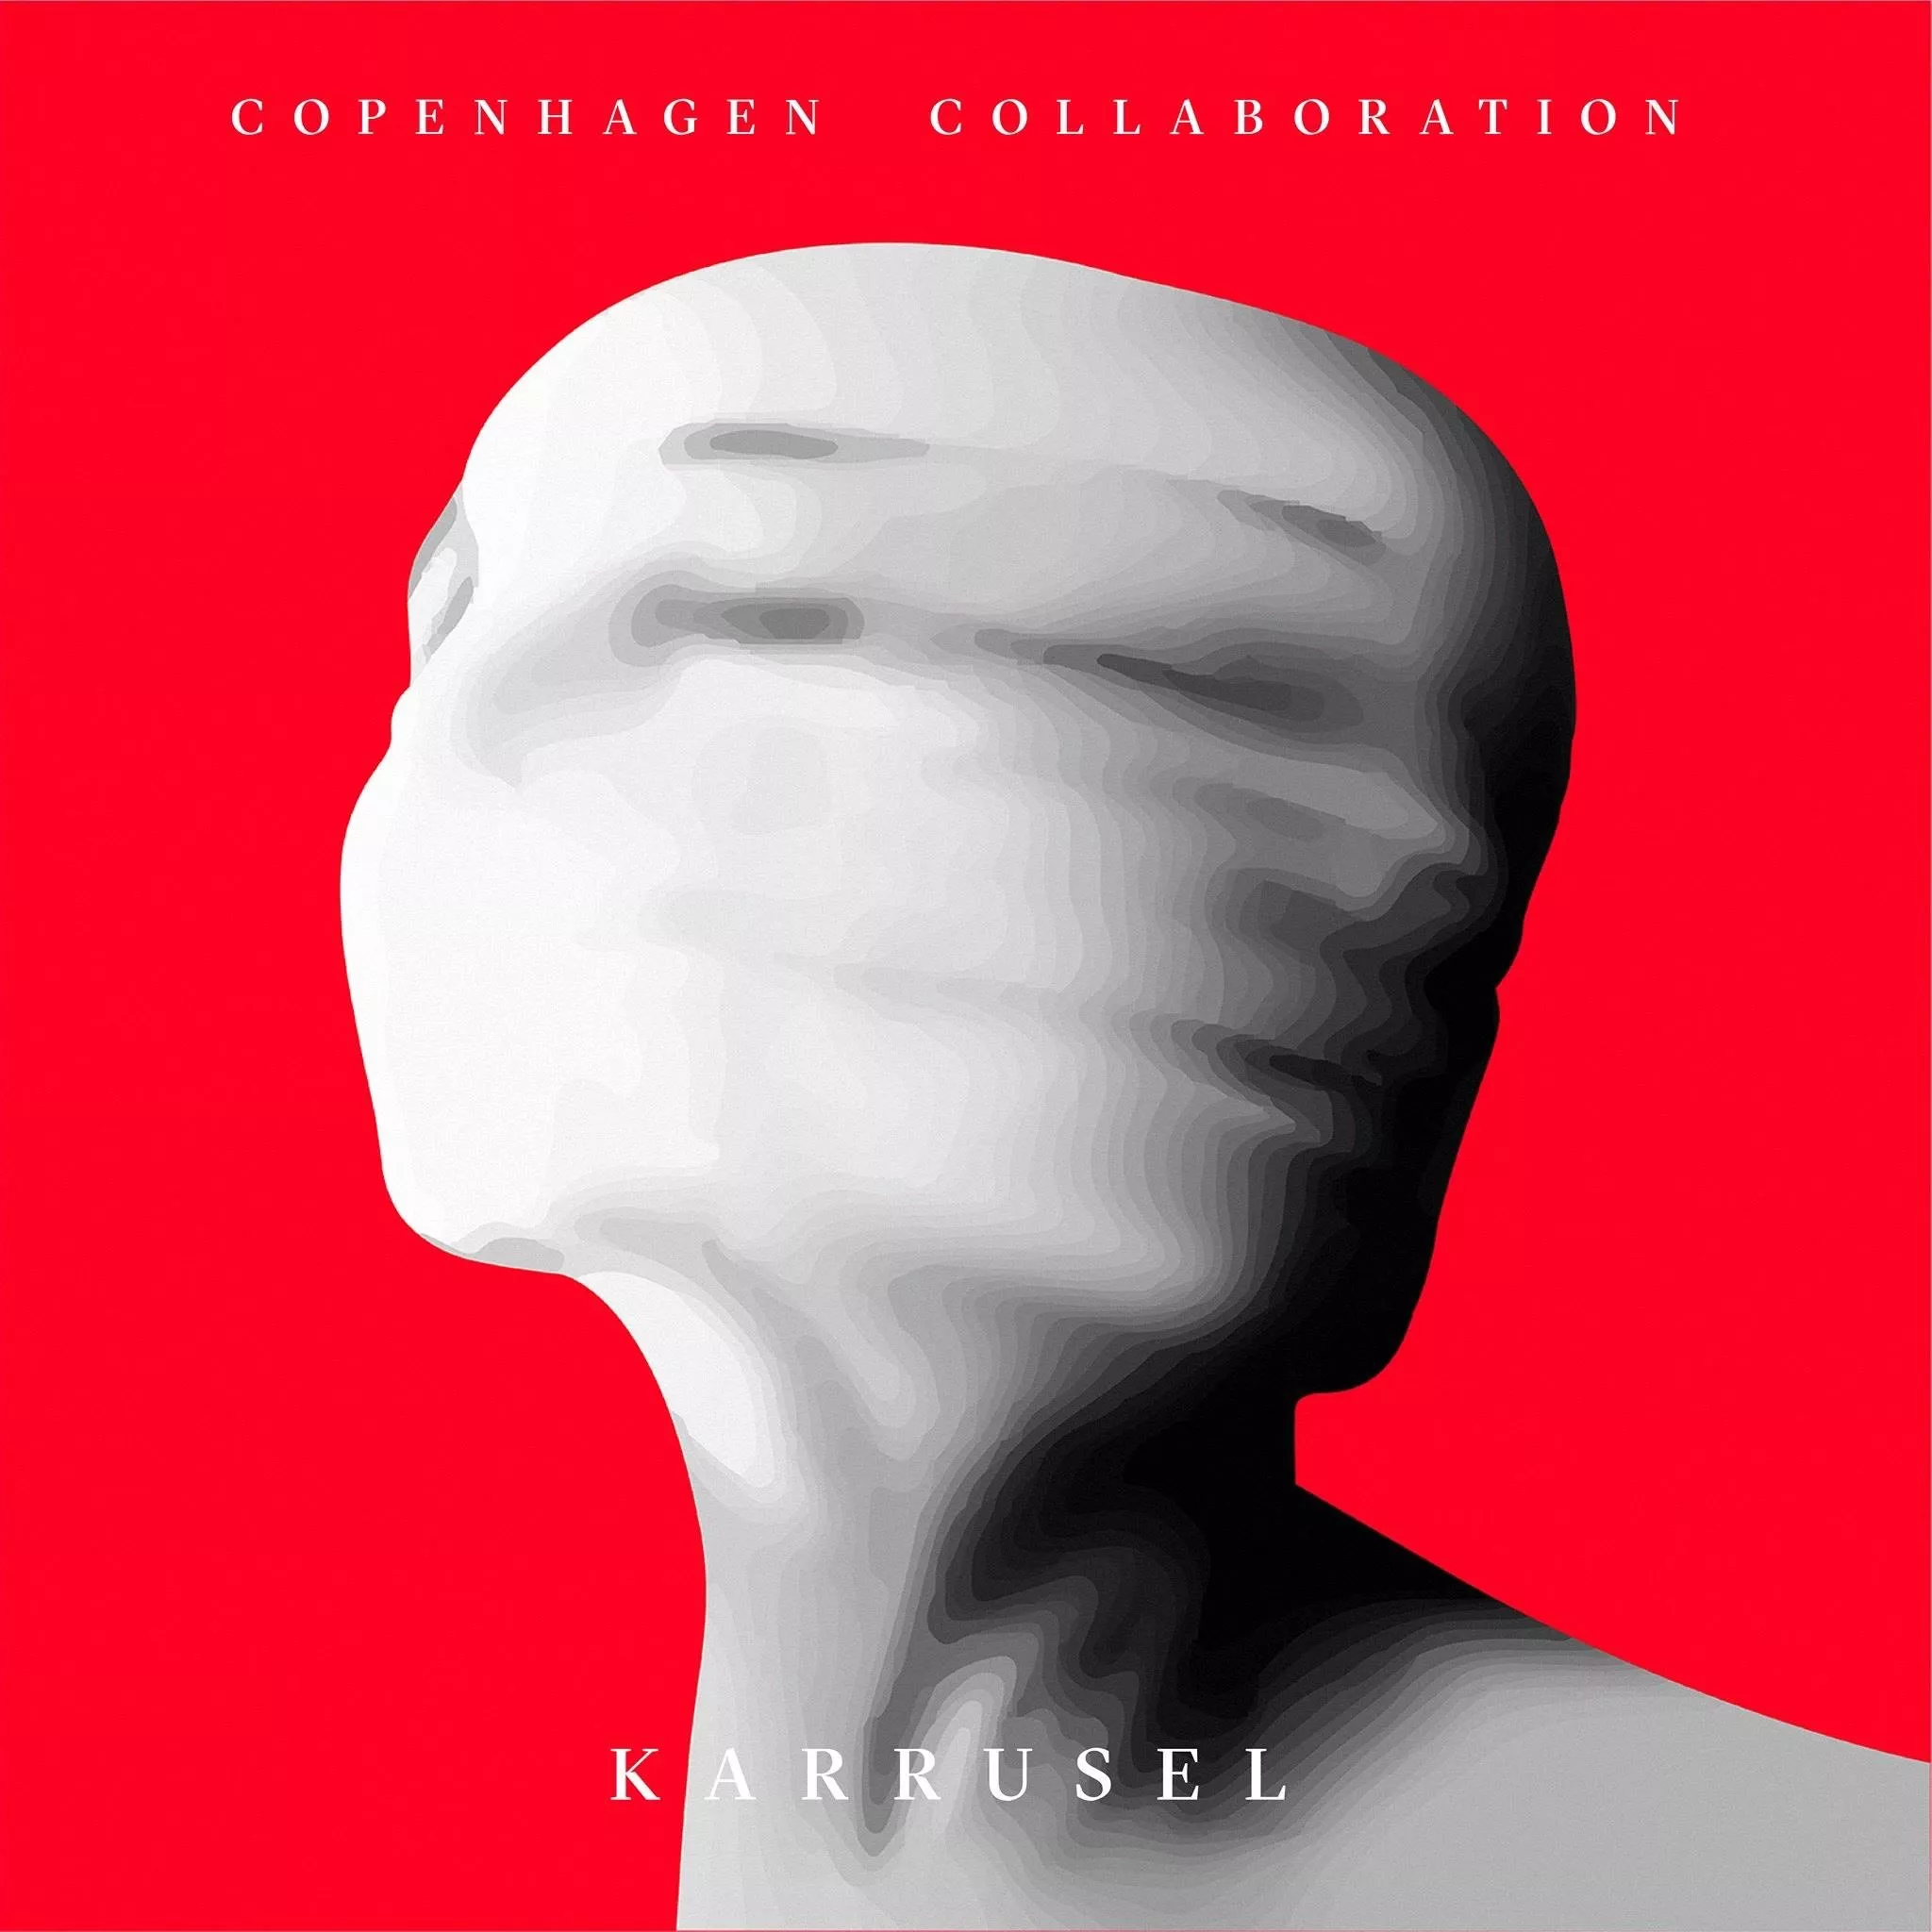 Karrusel - Copenhagen Collaboration